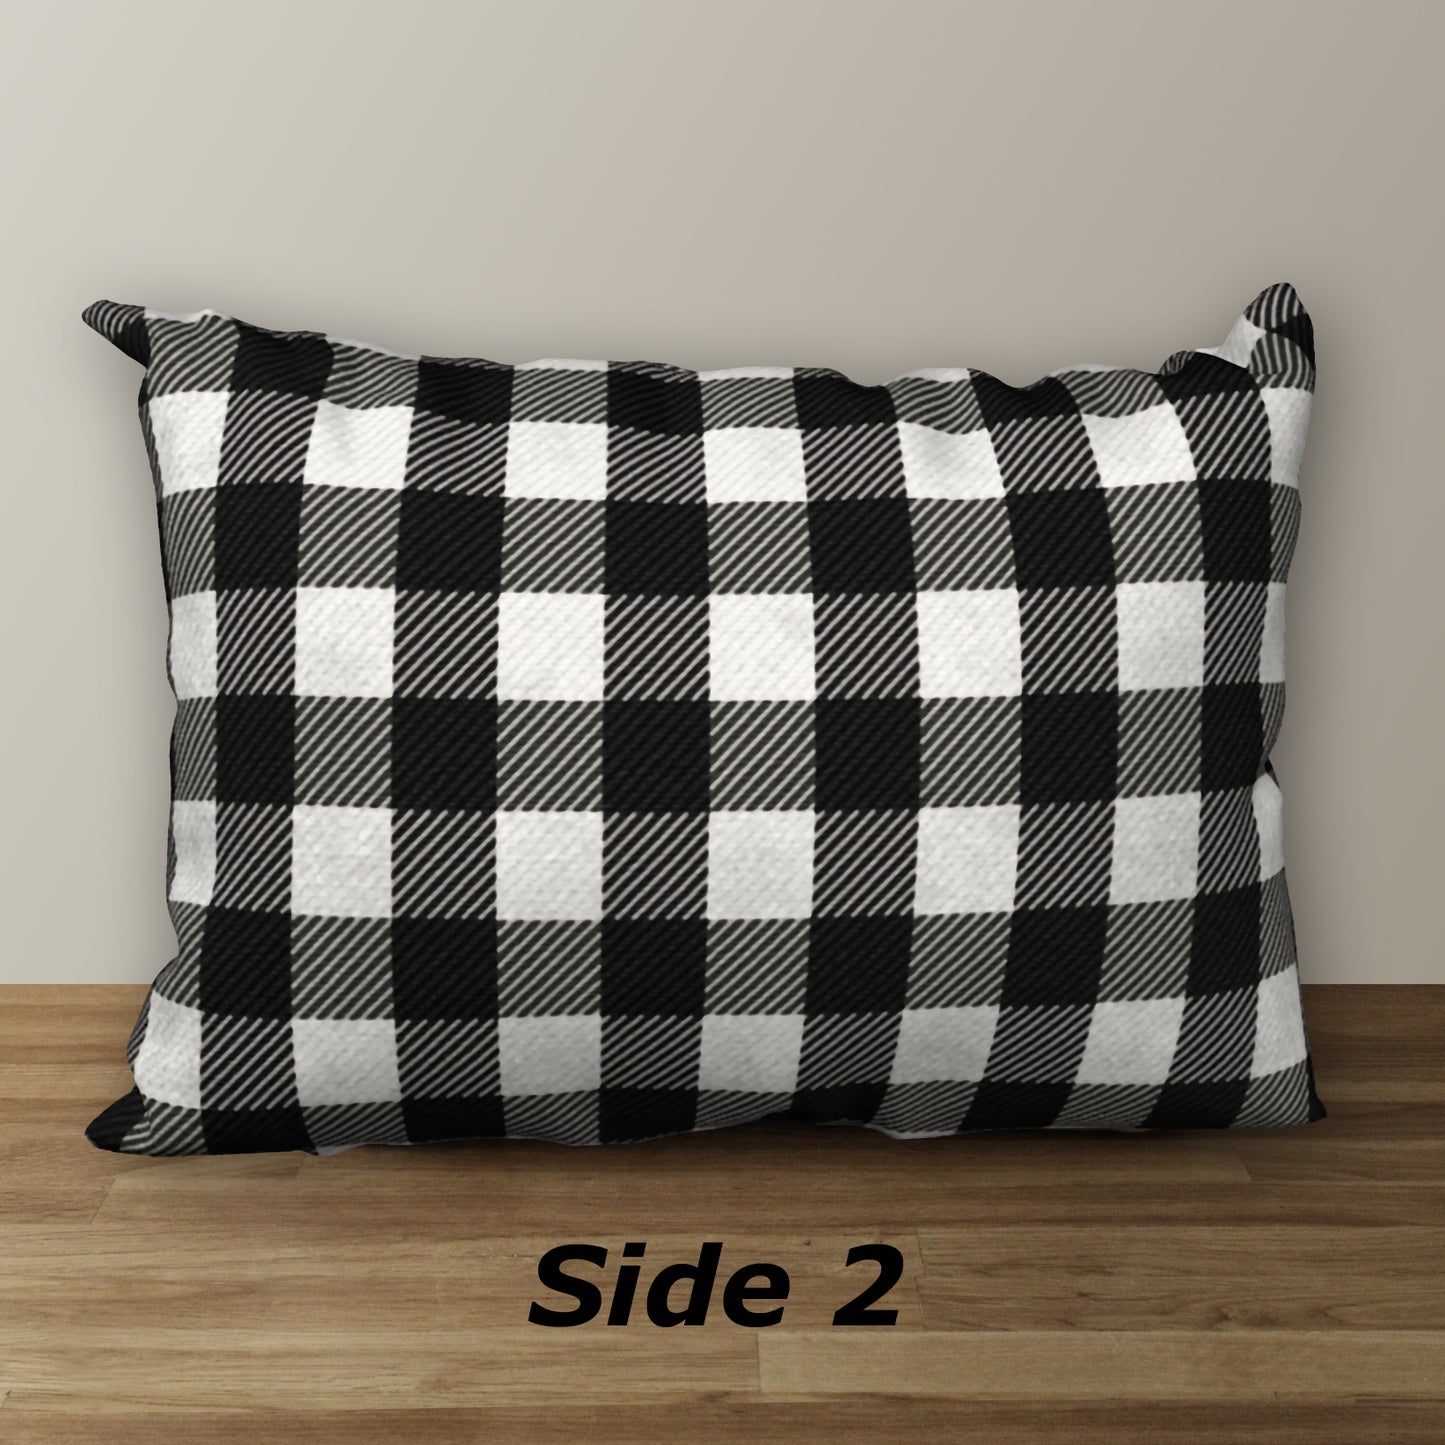 Black & White Buffalo Plaid Star Designer Pillow, 20"x14"